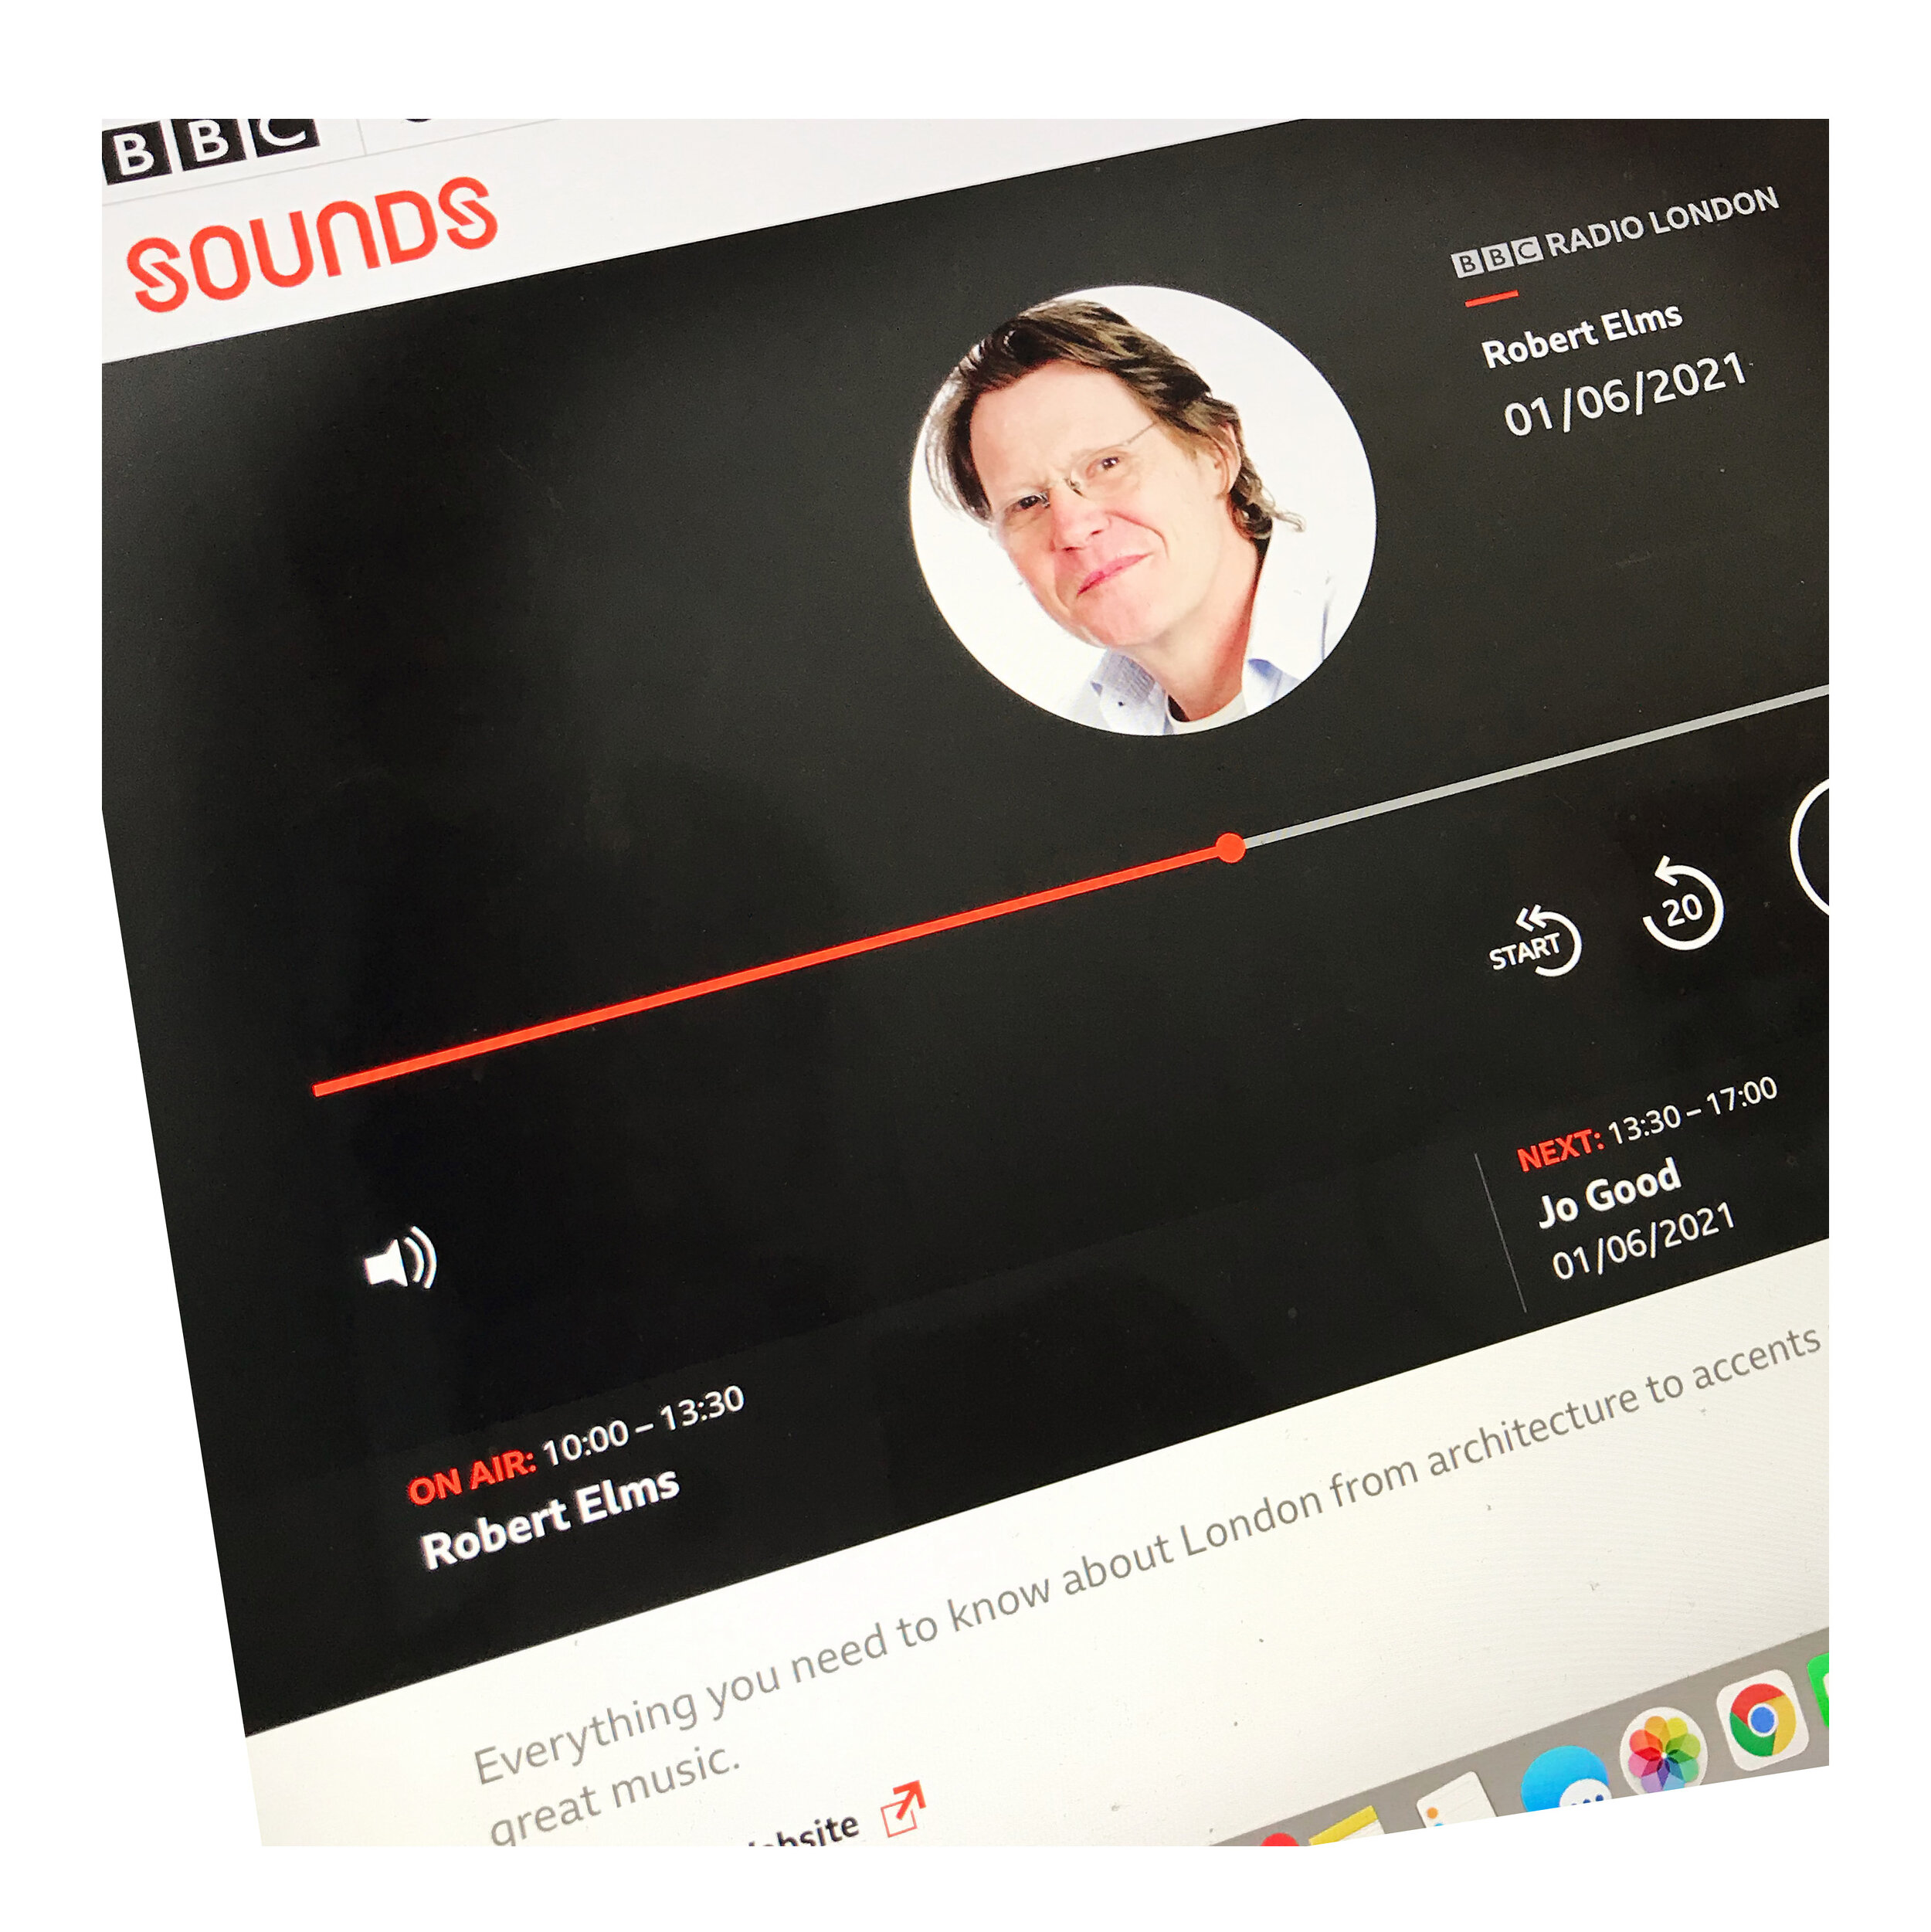   Robert Elms show on BBC Radio London    Whose London feature, 1st June 2021  